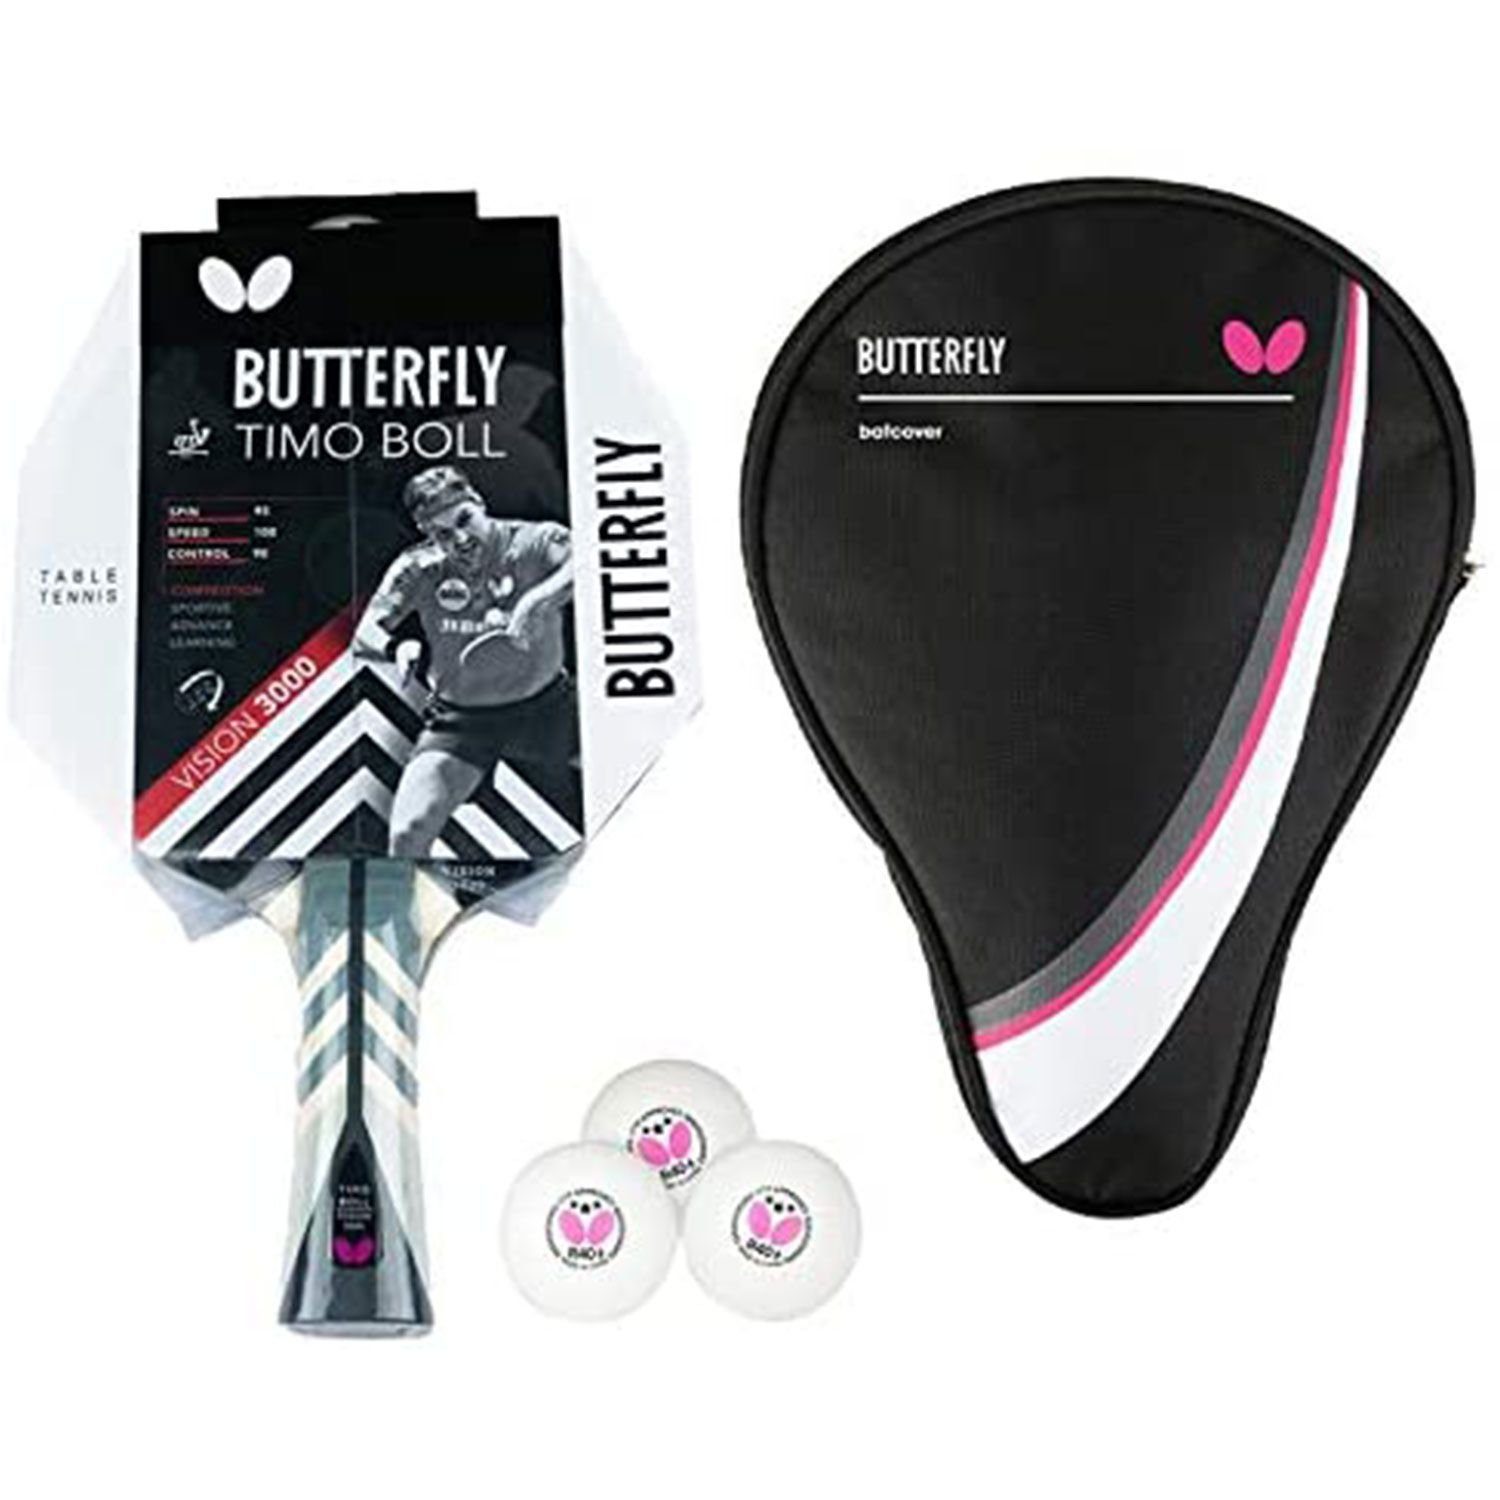 Butterfly Tischtennisschläger 1x Timo Boll Vision 3000 + Drive Case 1 + Bälle, Tischtennis Schläger Set Tischtennisset Table Tennis Bat Racket